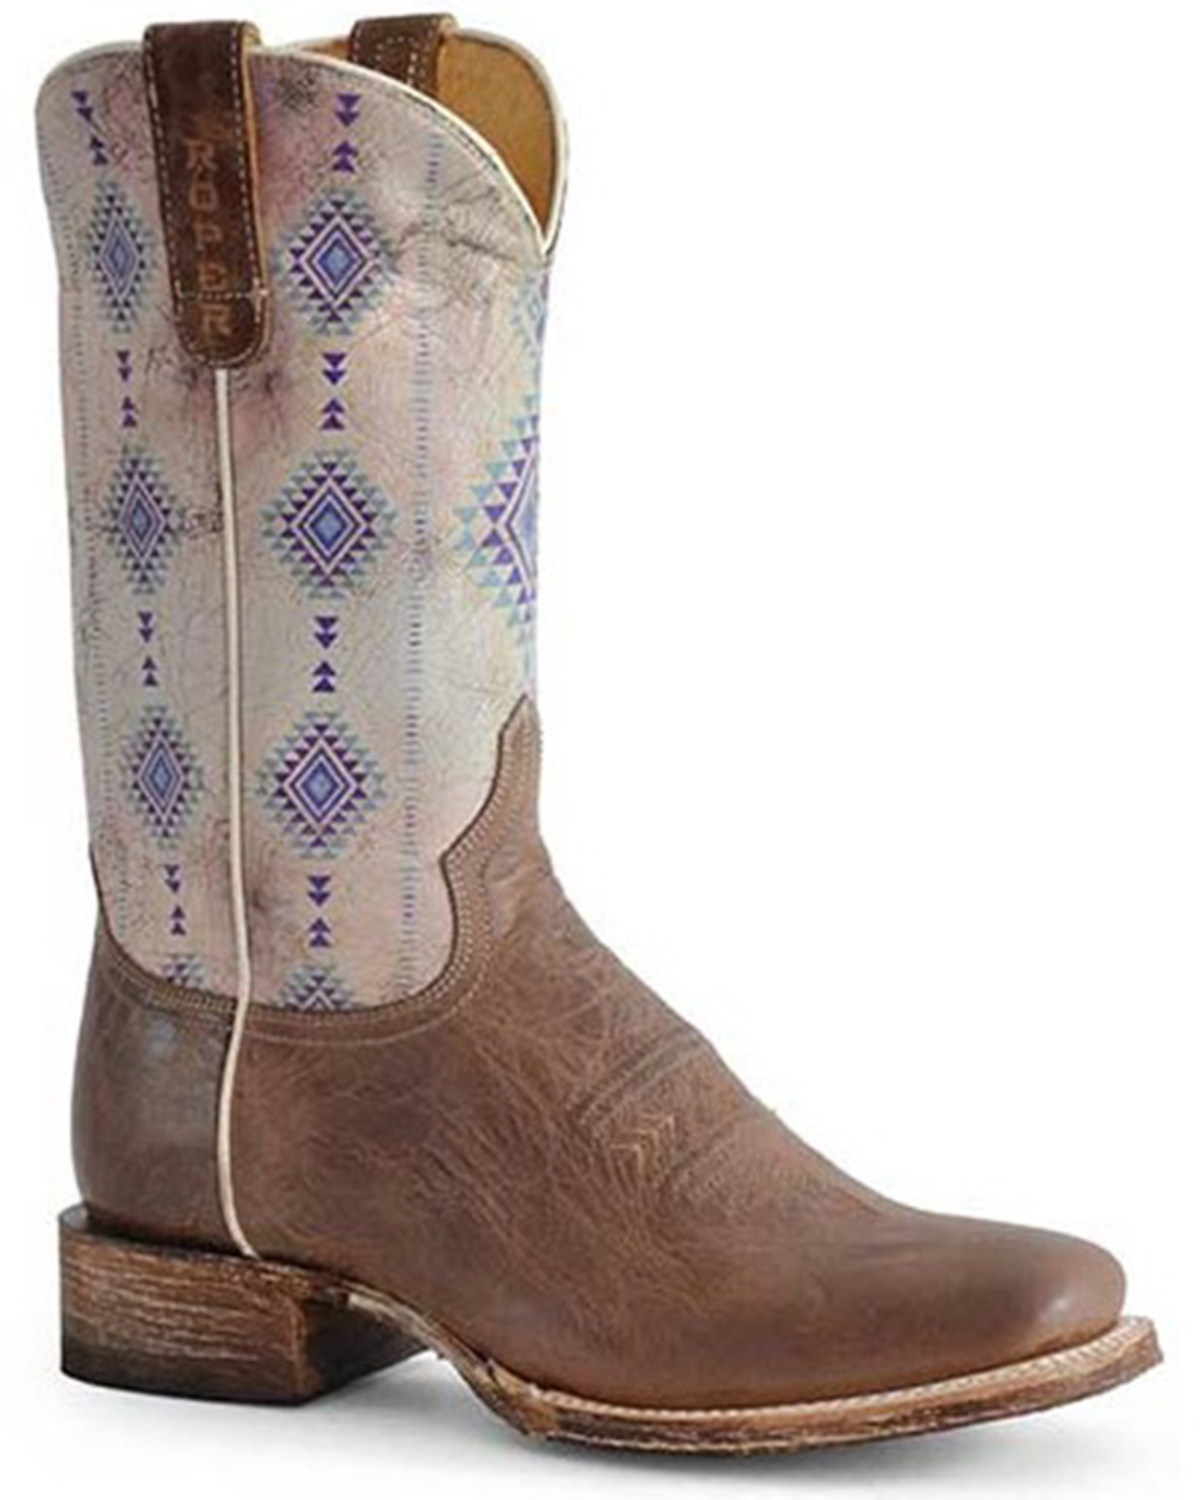 Roper Women's AZ Southwestern Western Boots - Square Toe